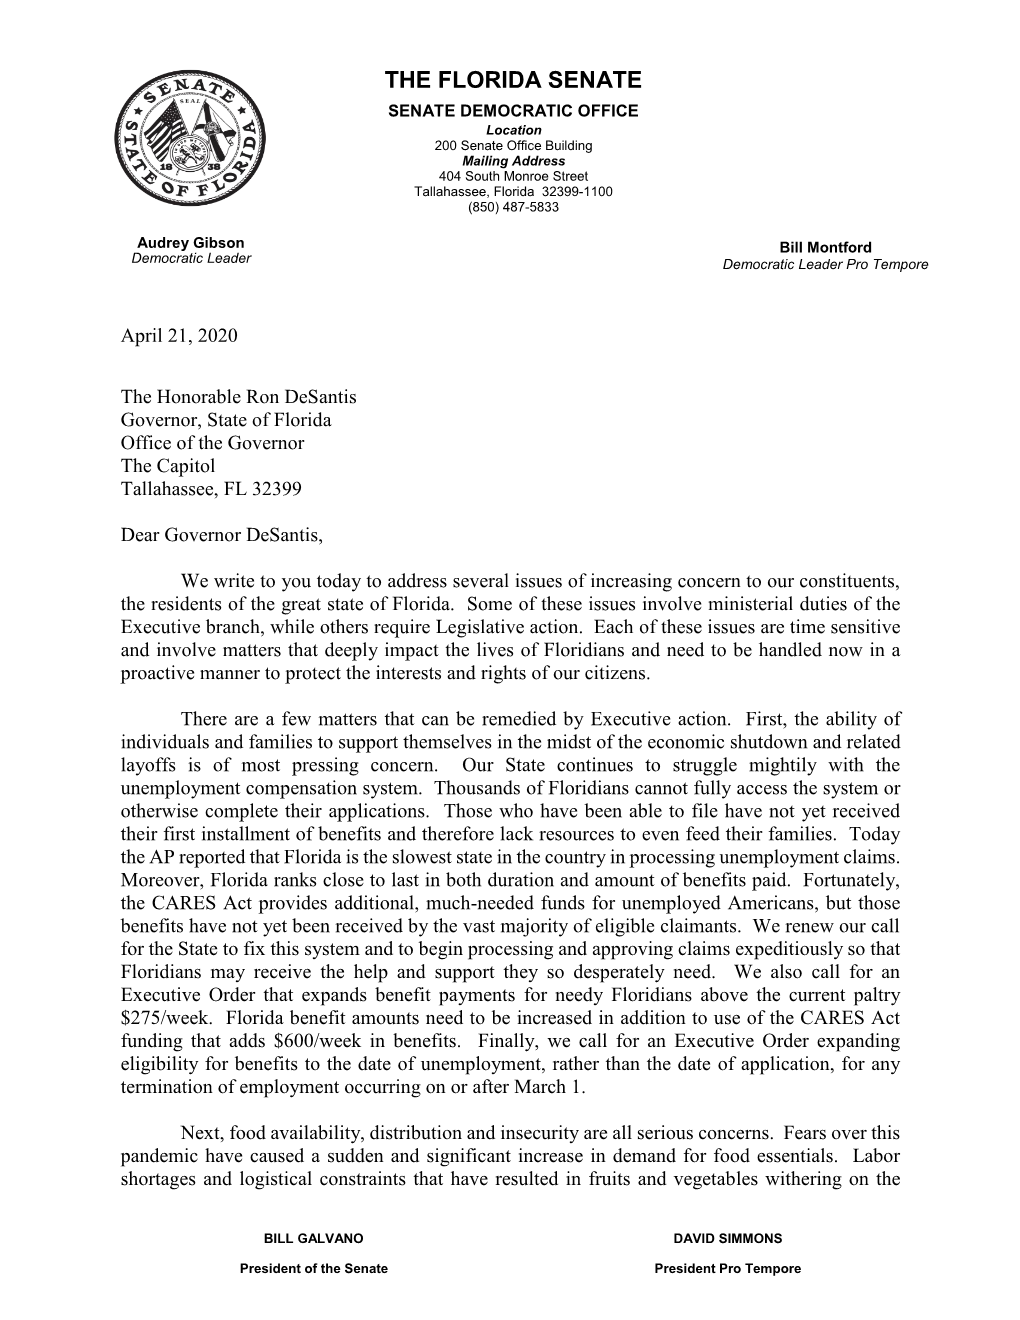 Letter to Governor Desantis Regarding